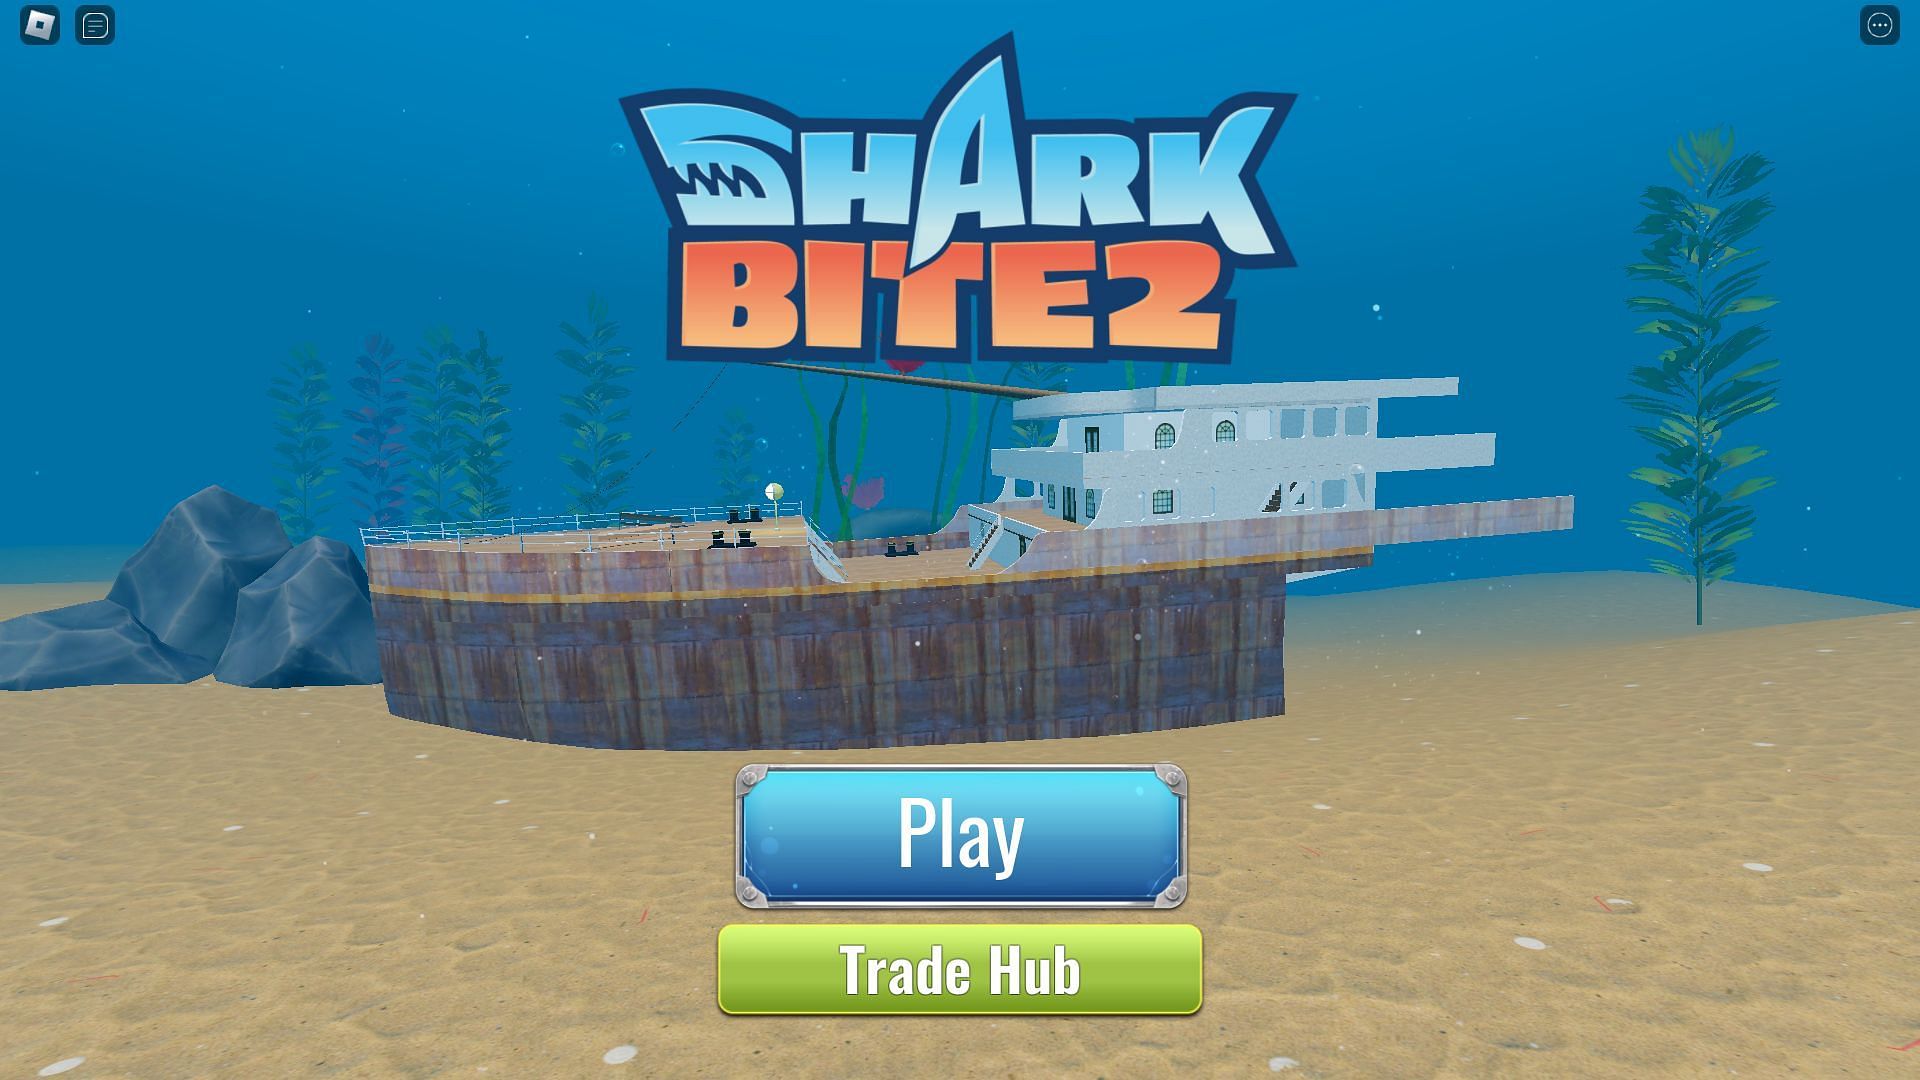 Sharkbite 2 Title Screen (Image via Roblox)